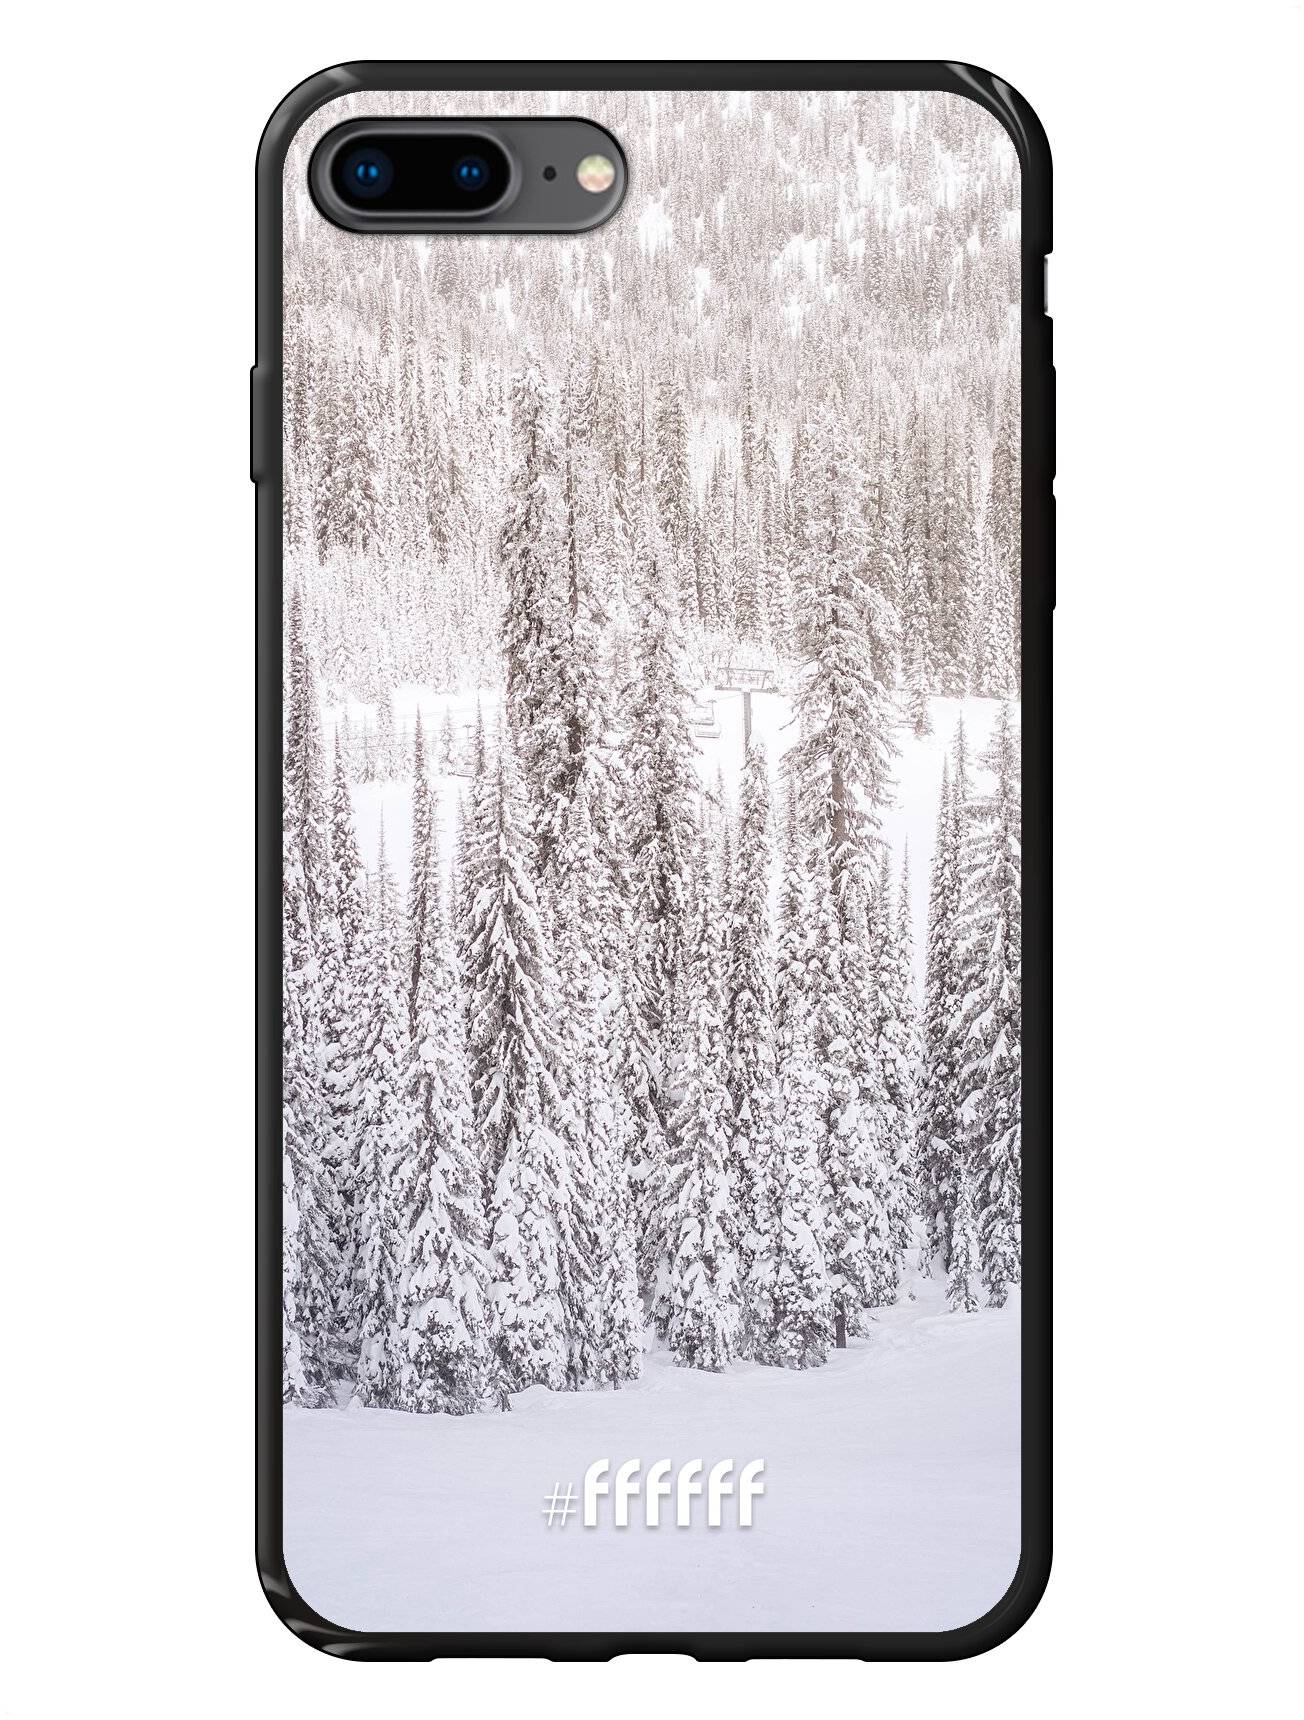 Snowy iPhone 8 Plus